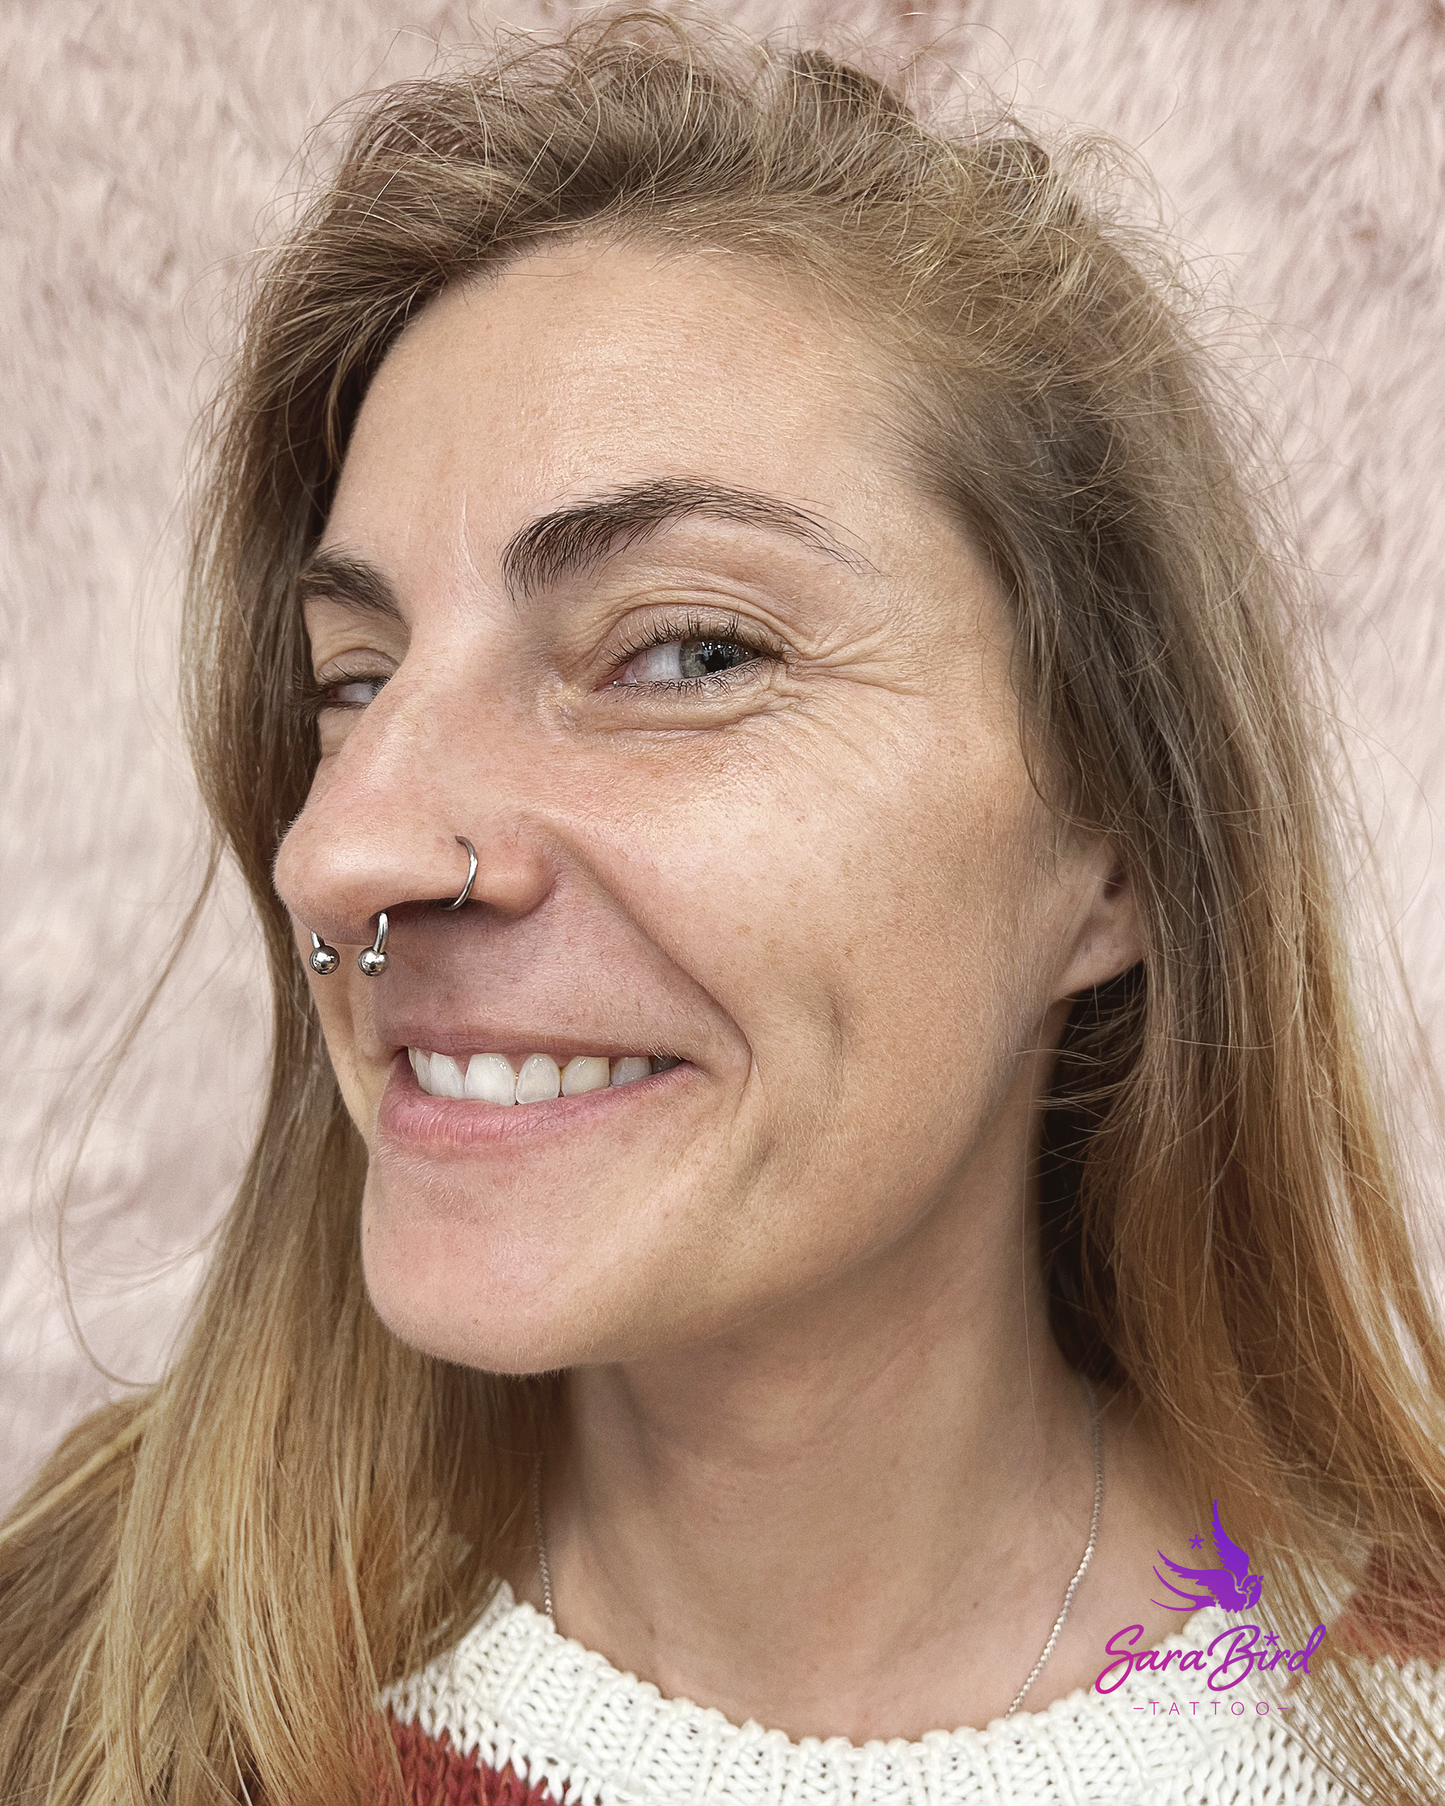 Titanium Jeweled Nose Piecing + Anesthetic